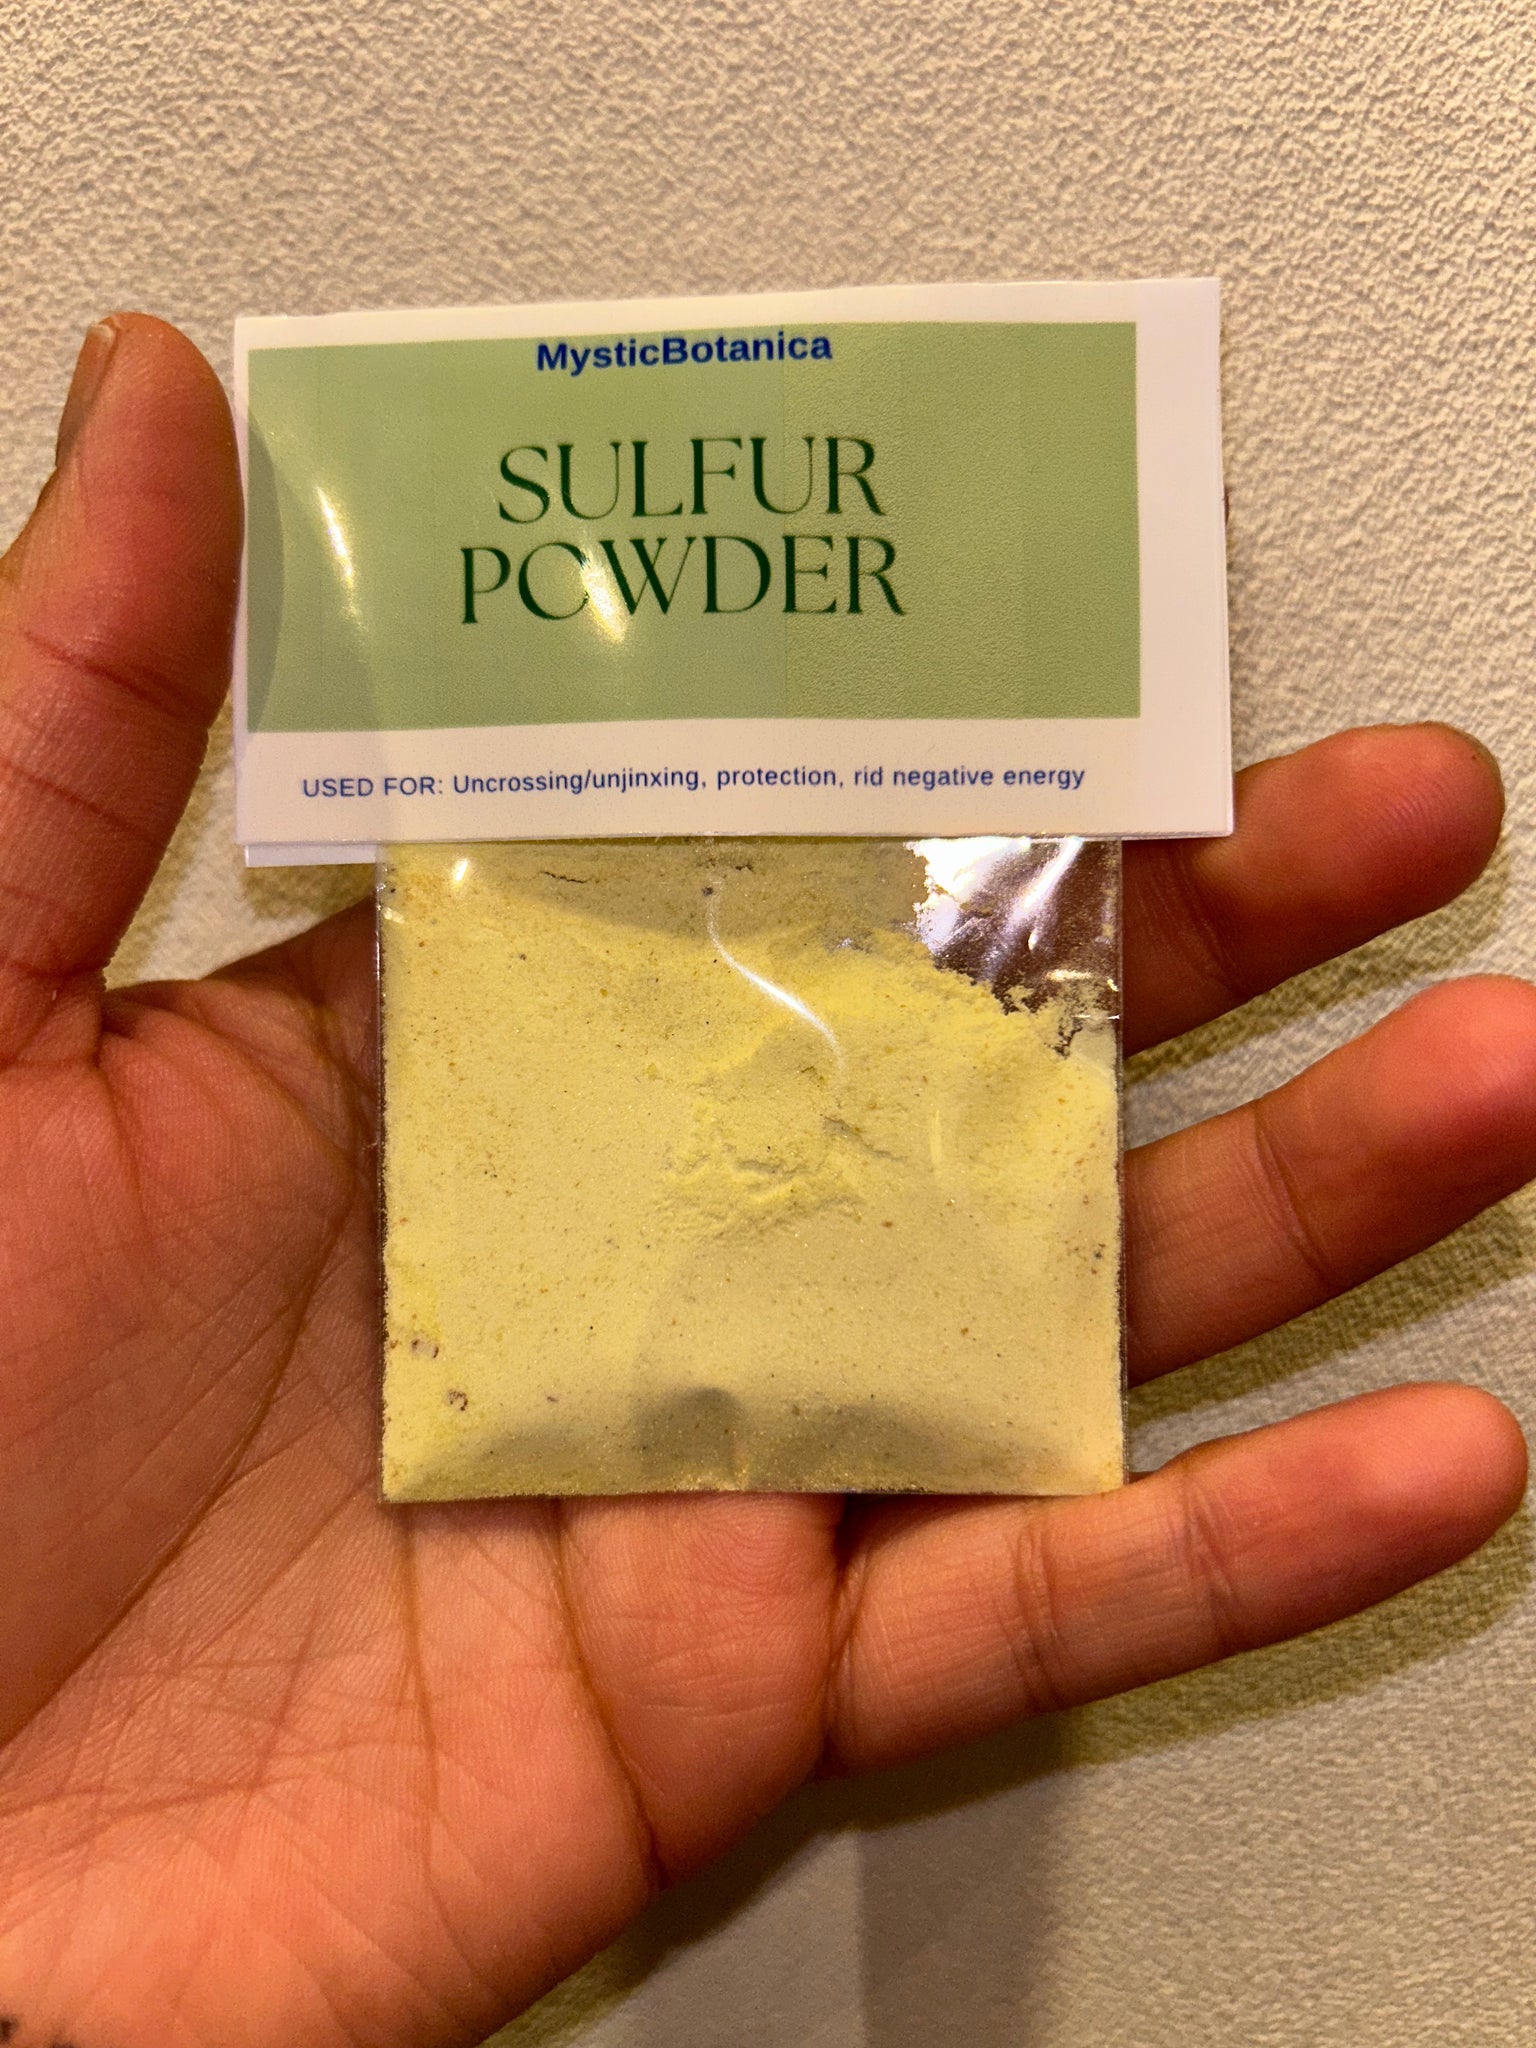 Sulfur powder (polvo de asufre)